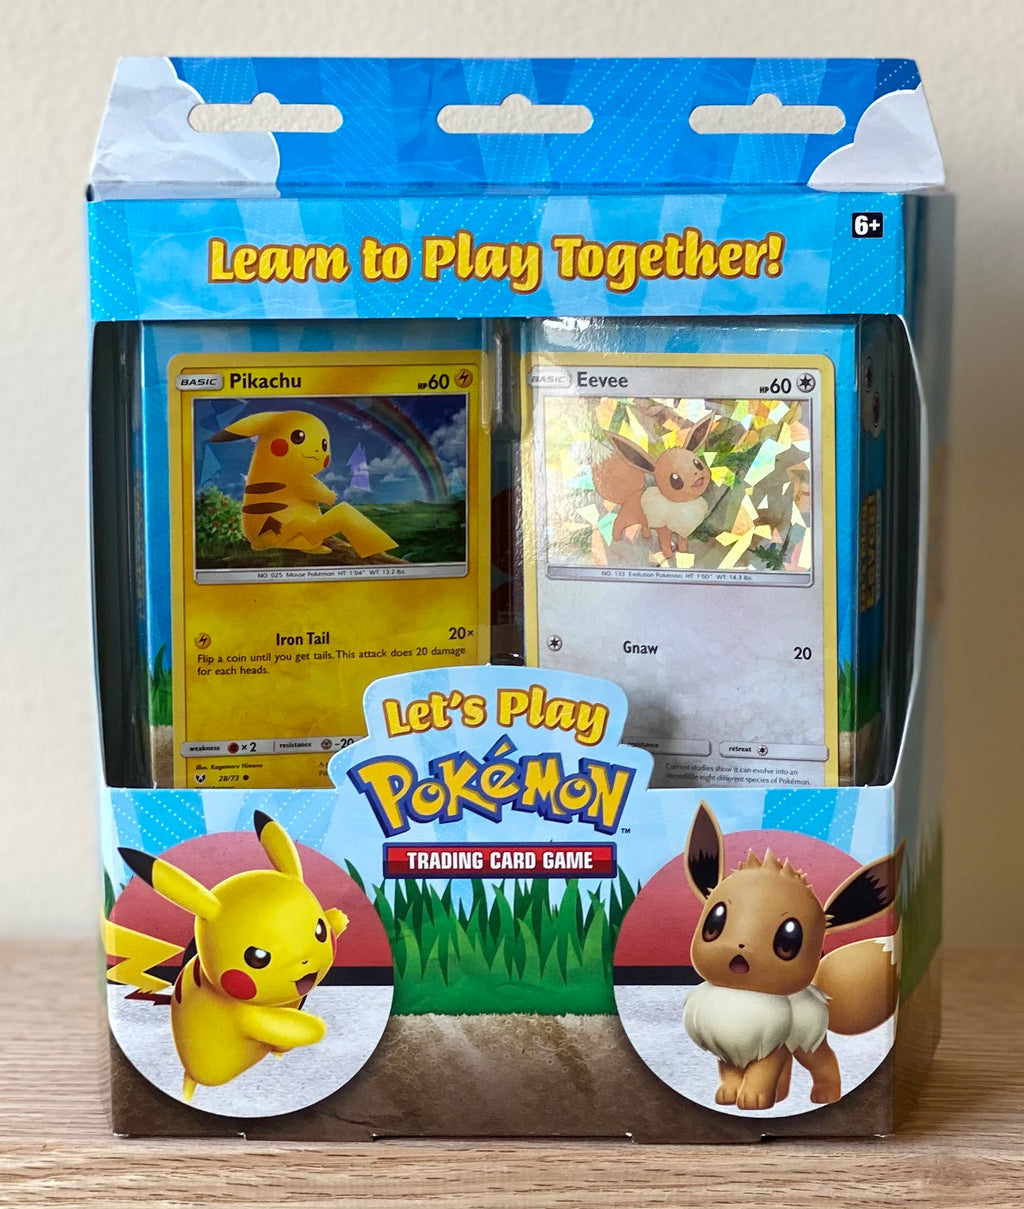 Pokémon TCG: Let's Play, Pikachu! Theme Deck